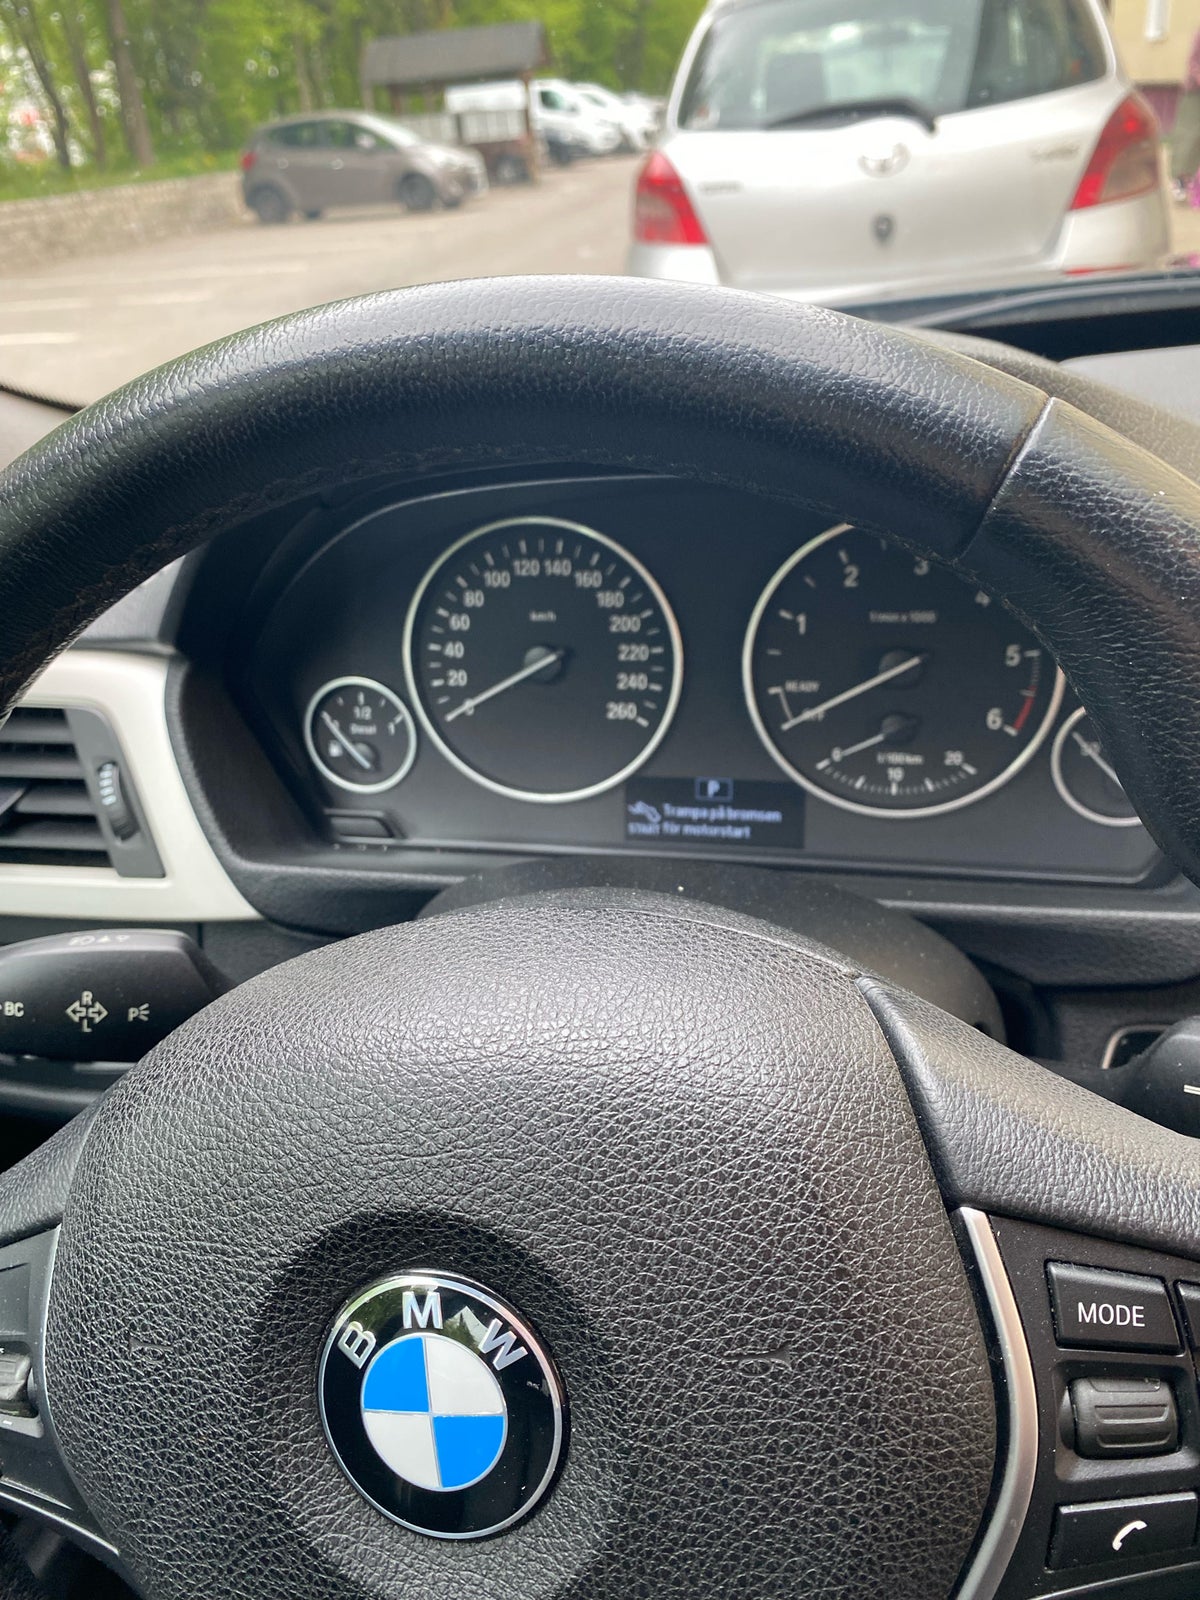 BMW 320d, 2,0 Gran Turismo aut., Diesel